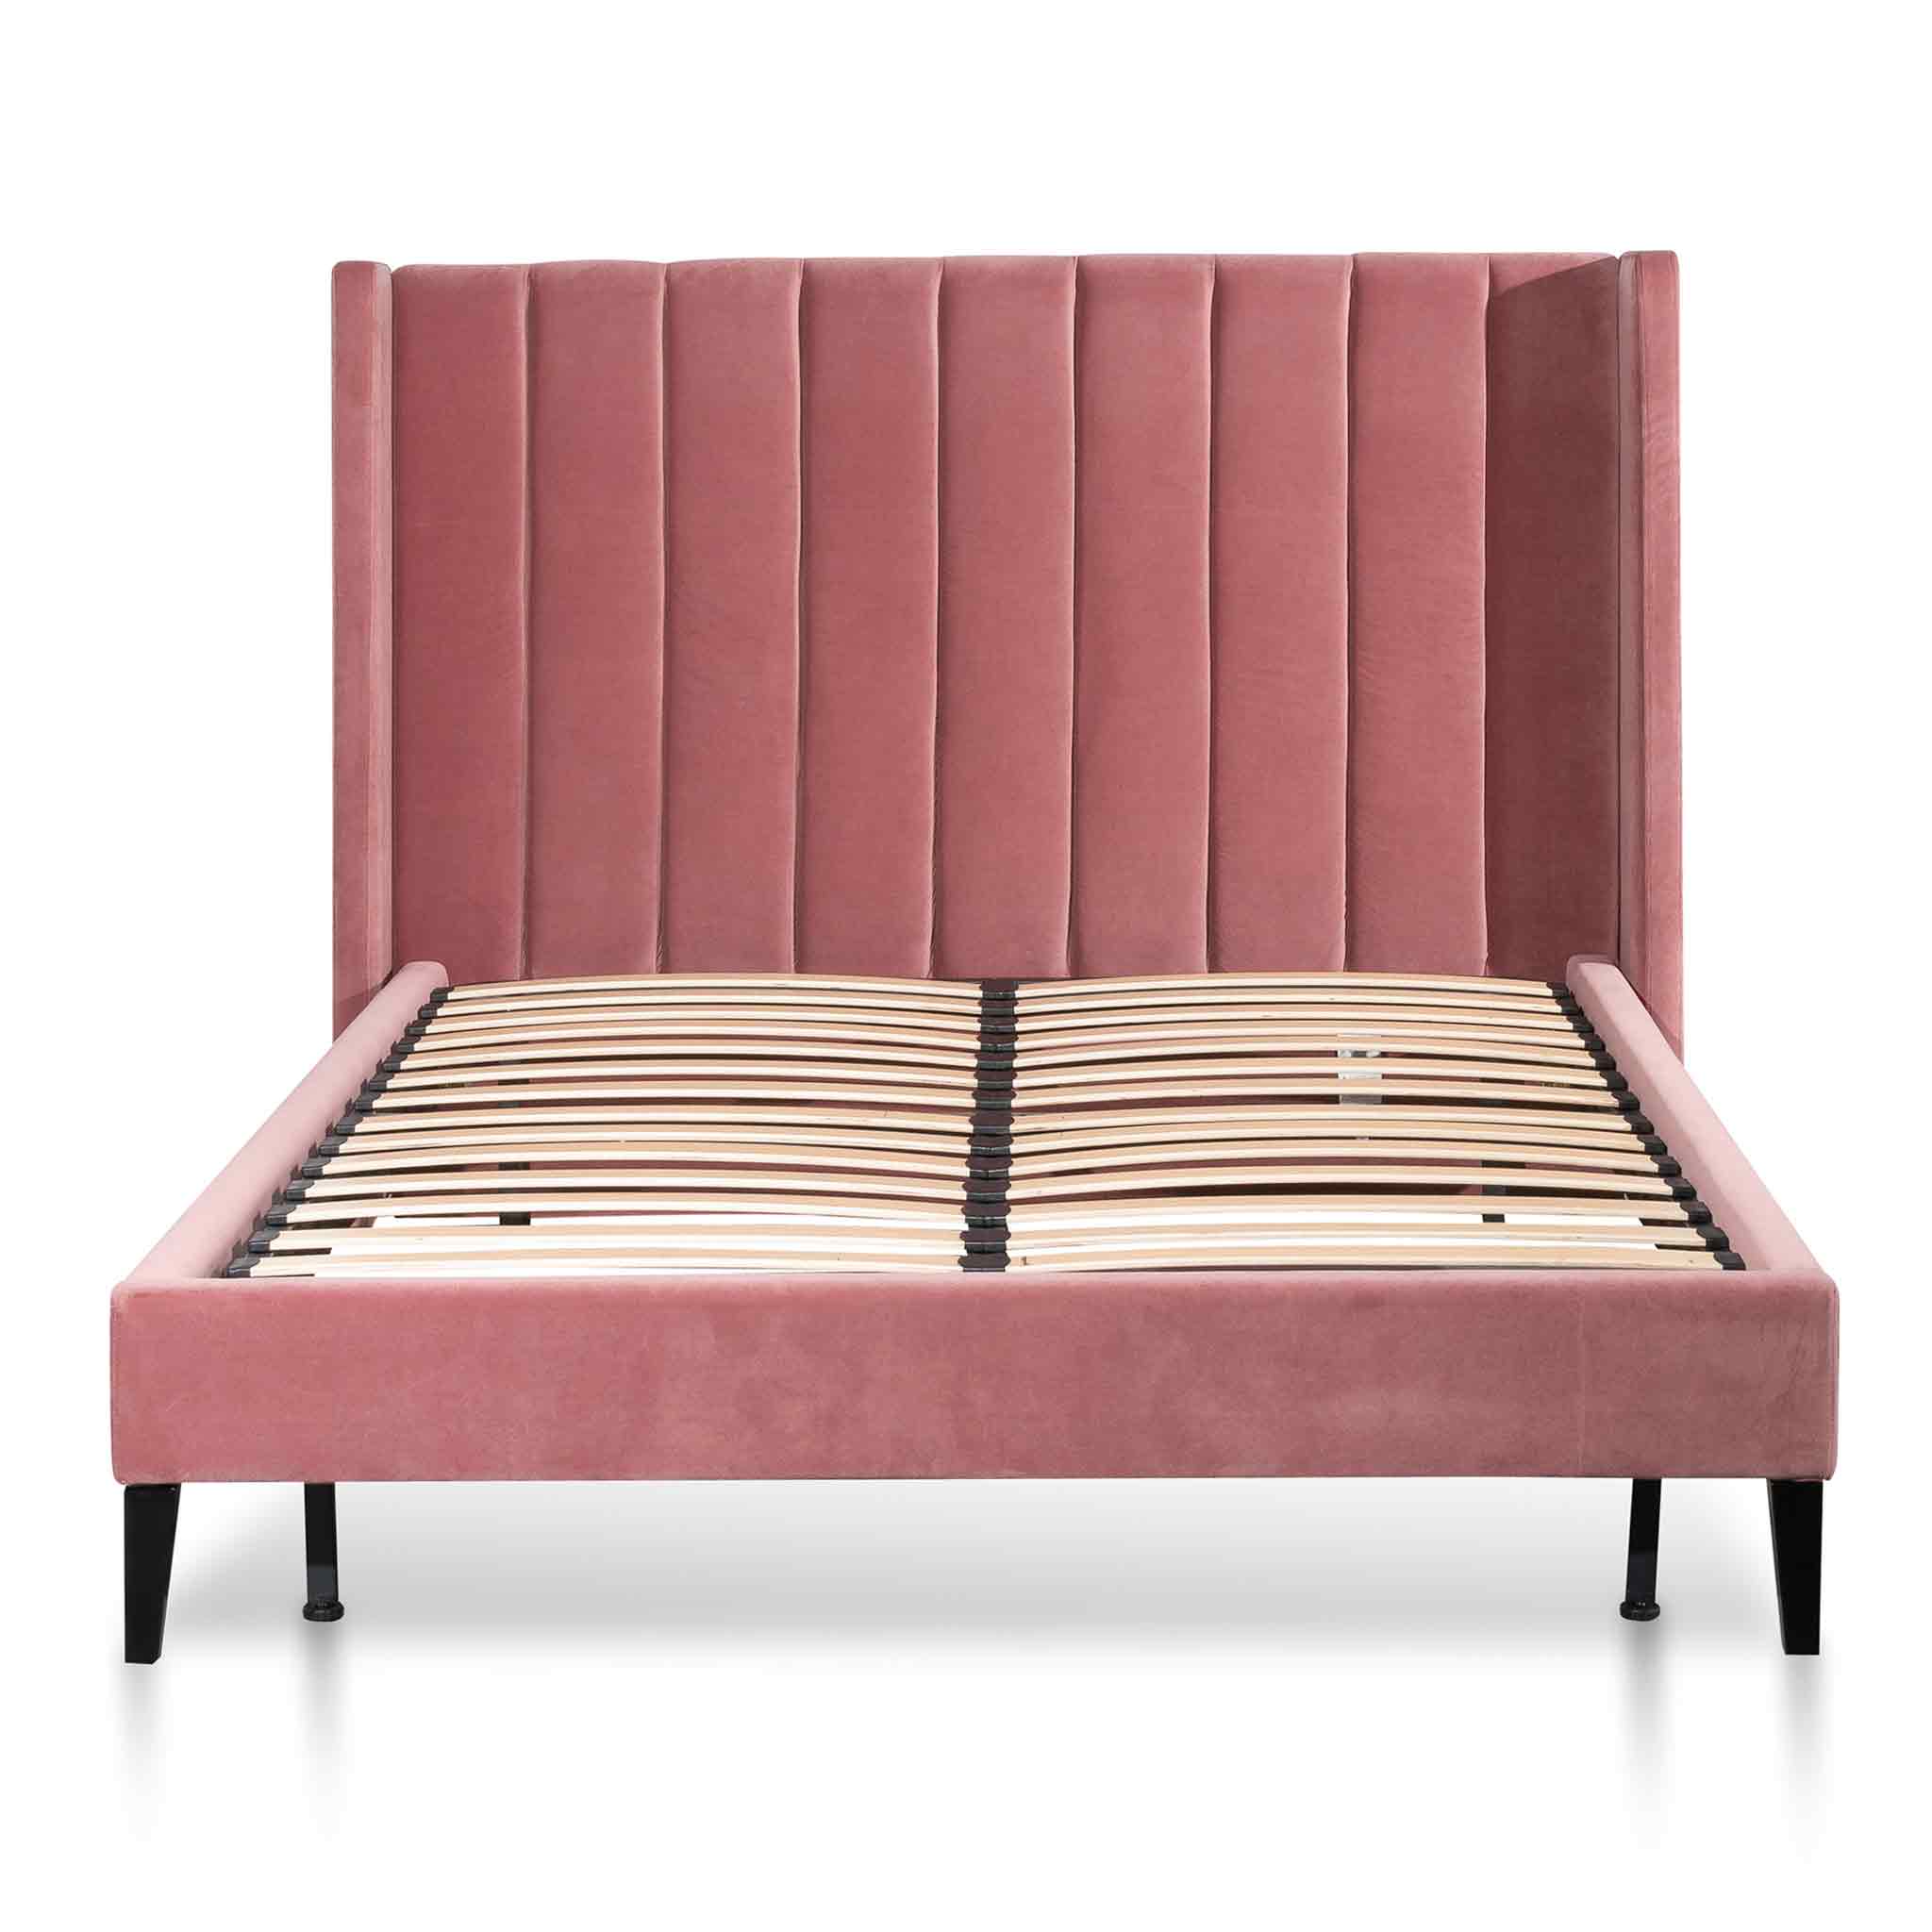 Mark Queen Bed Frame - Blush Peach - Beds